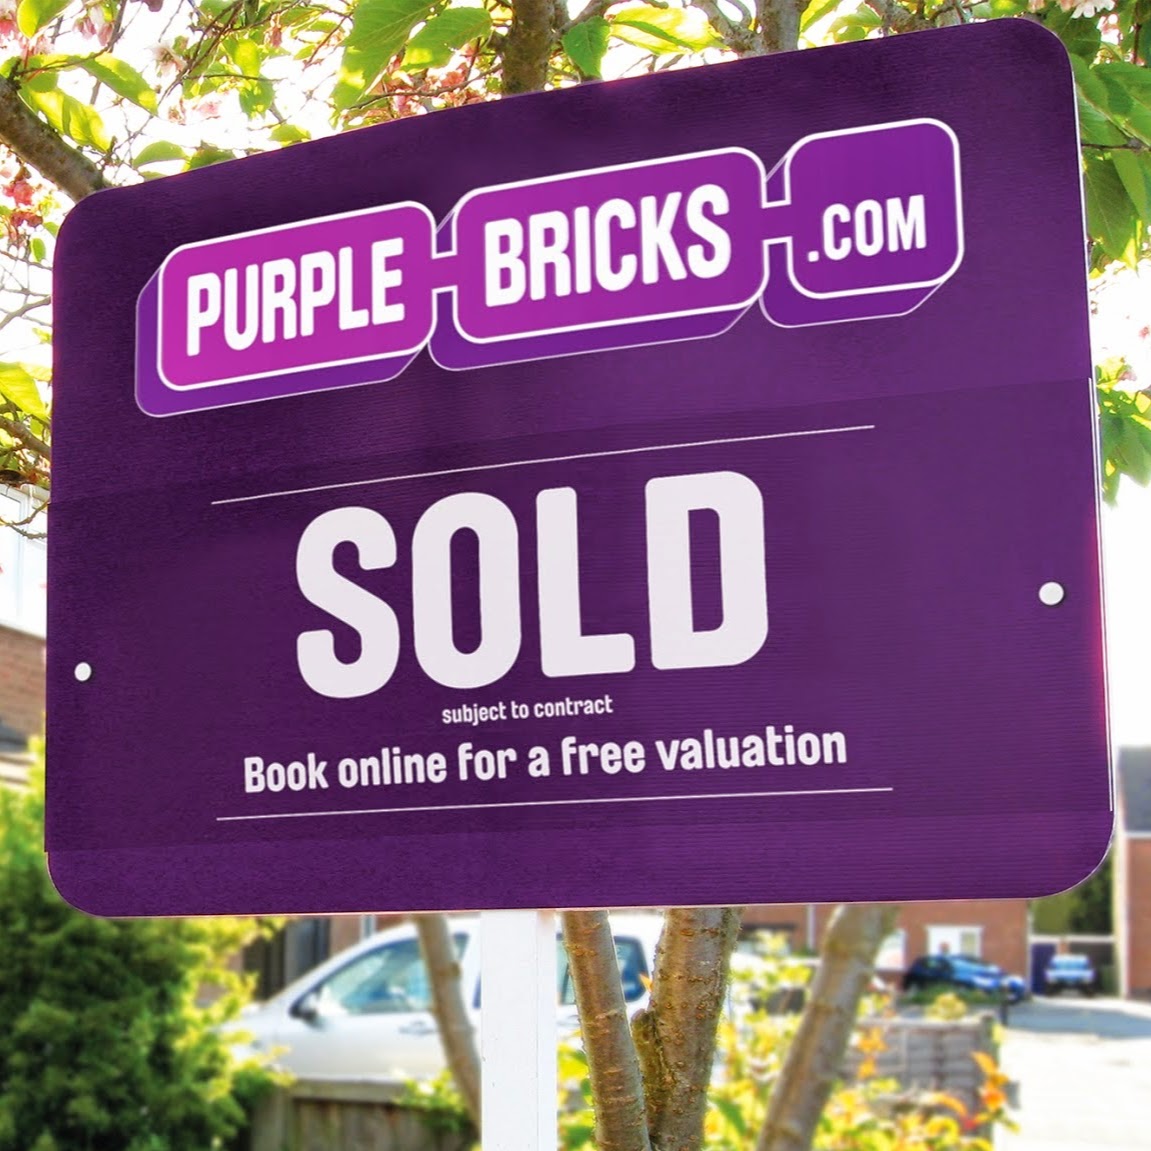 Purplebricks - the UK Unicorn with the crazy value soars, we suggest a cheaper alternative